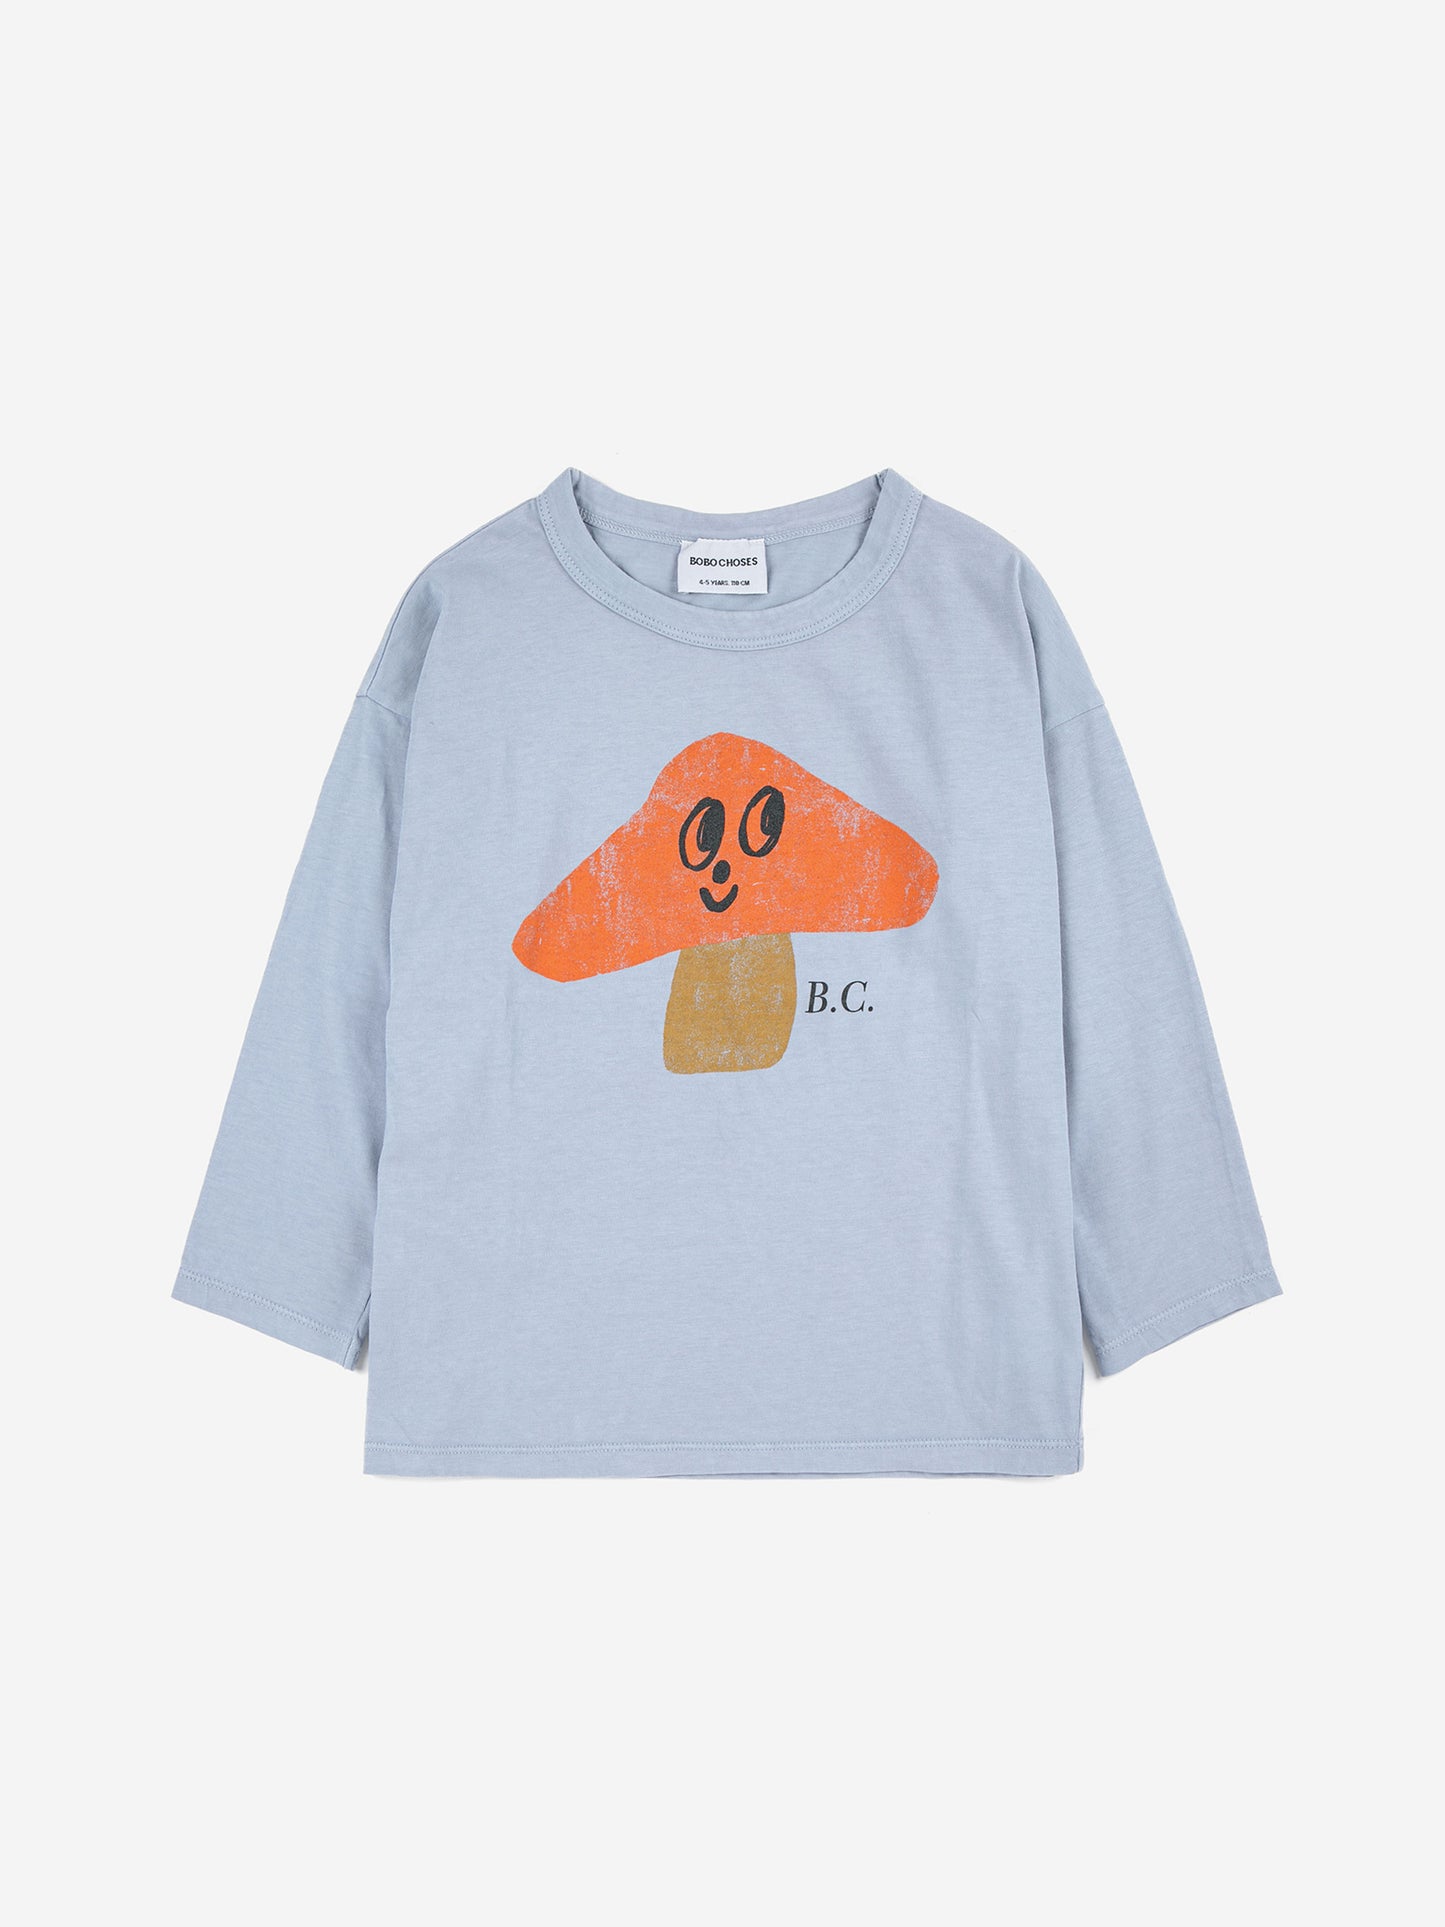 Mr. Mushroom long sleeve T-shirt